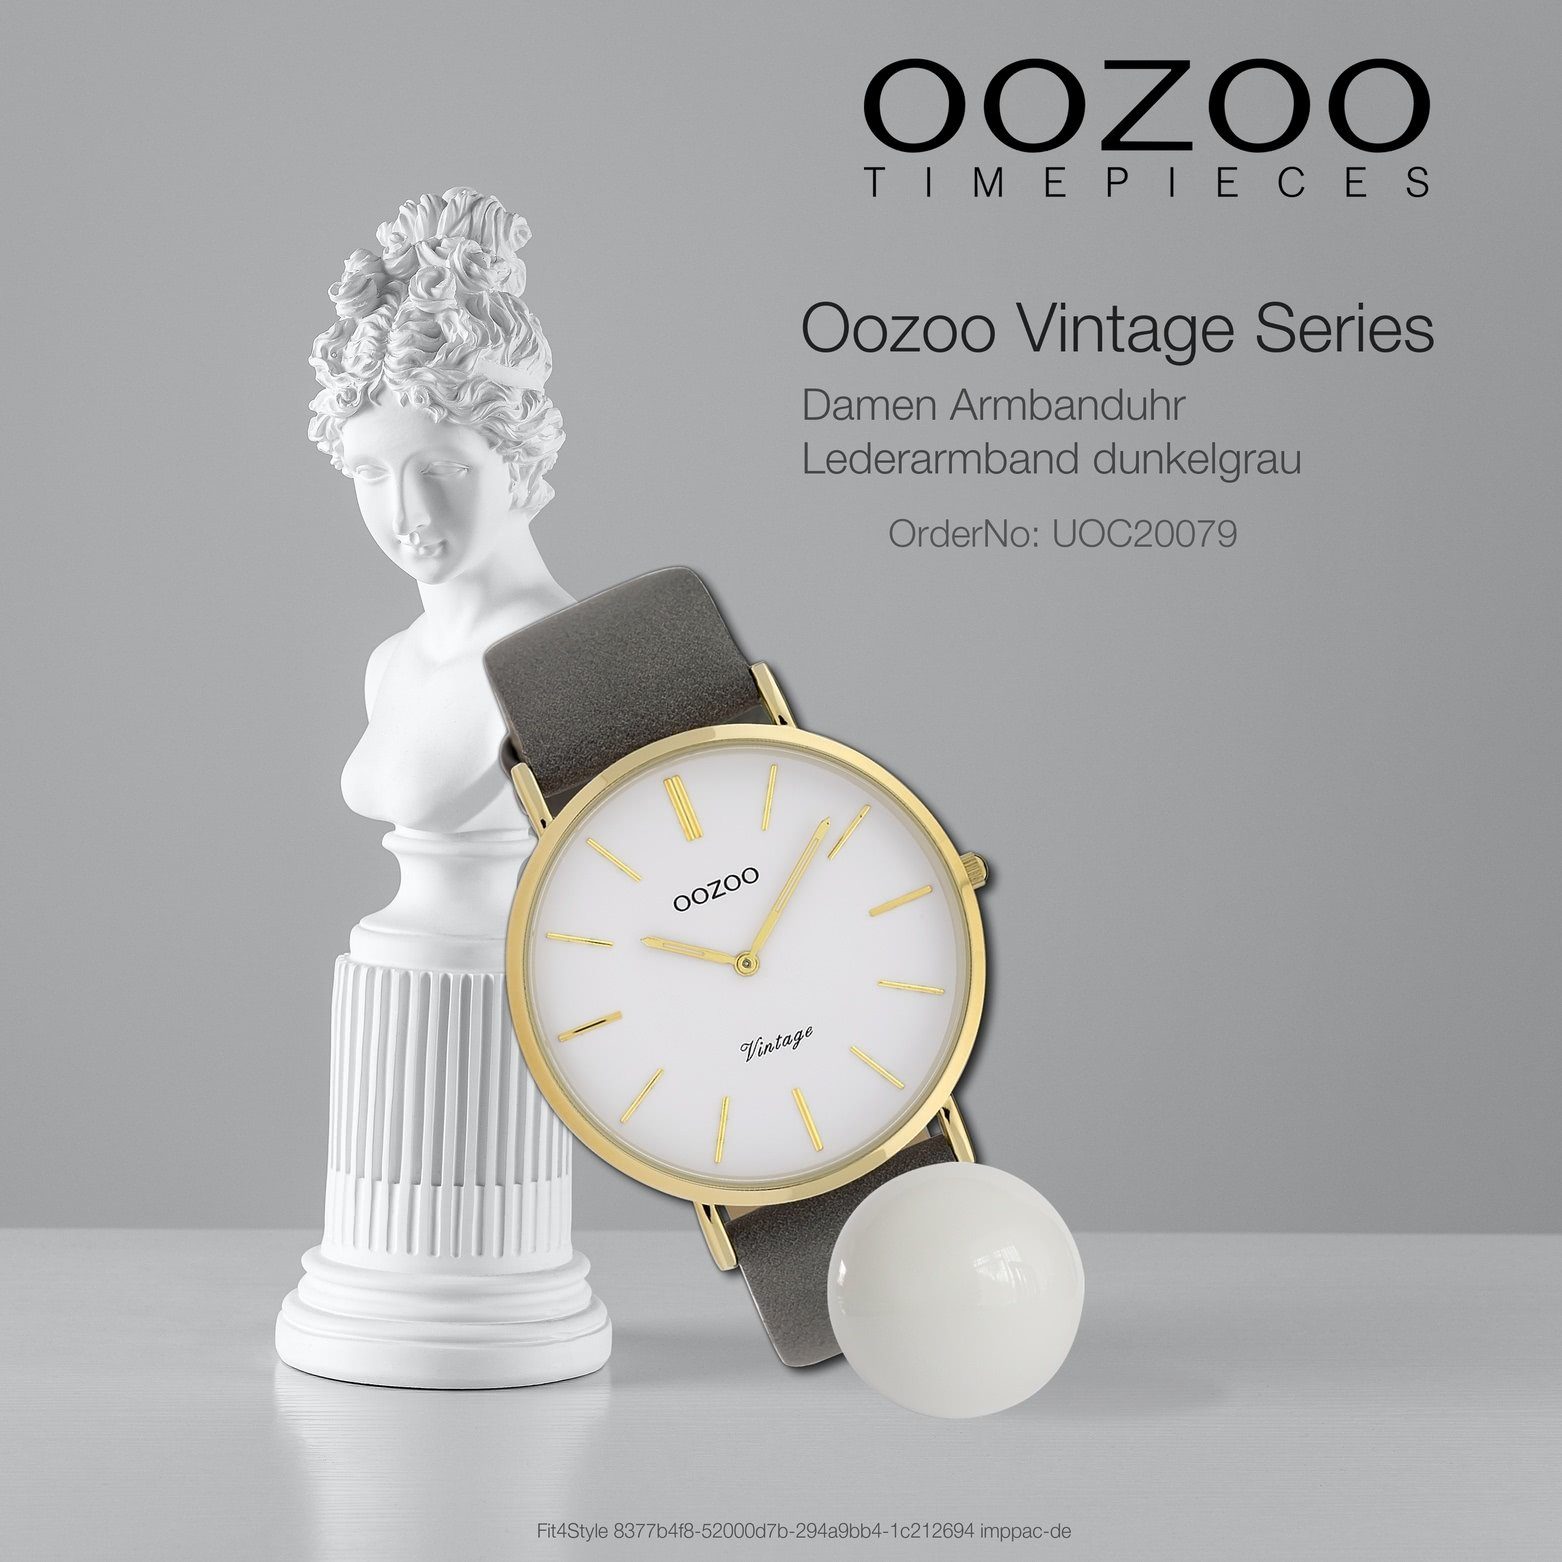 Damenuhr Lederarmband, Leder, Armbanduhr Fashion-Style (ca. groß Quarzuhr Damen Oozoo Ultra Slim 40mm) OOZOO rund,